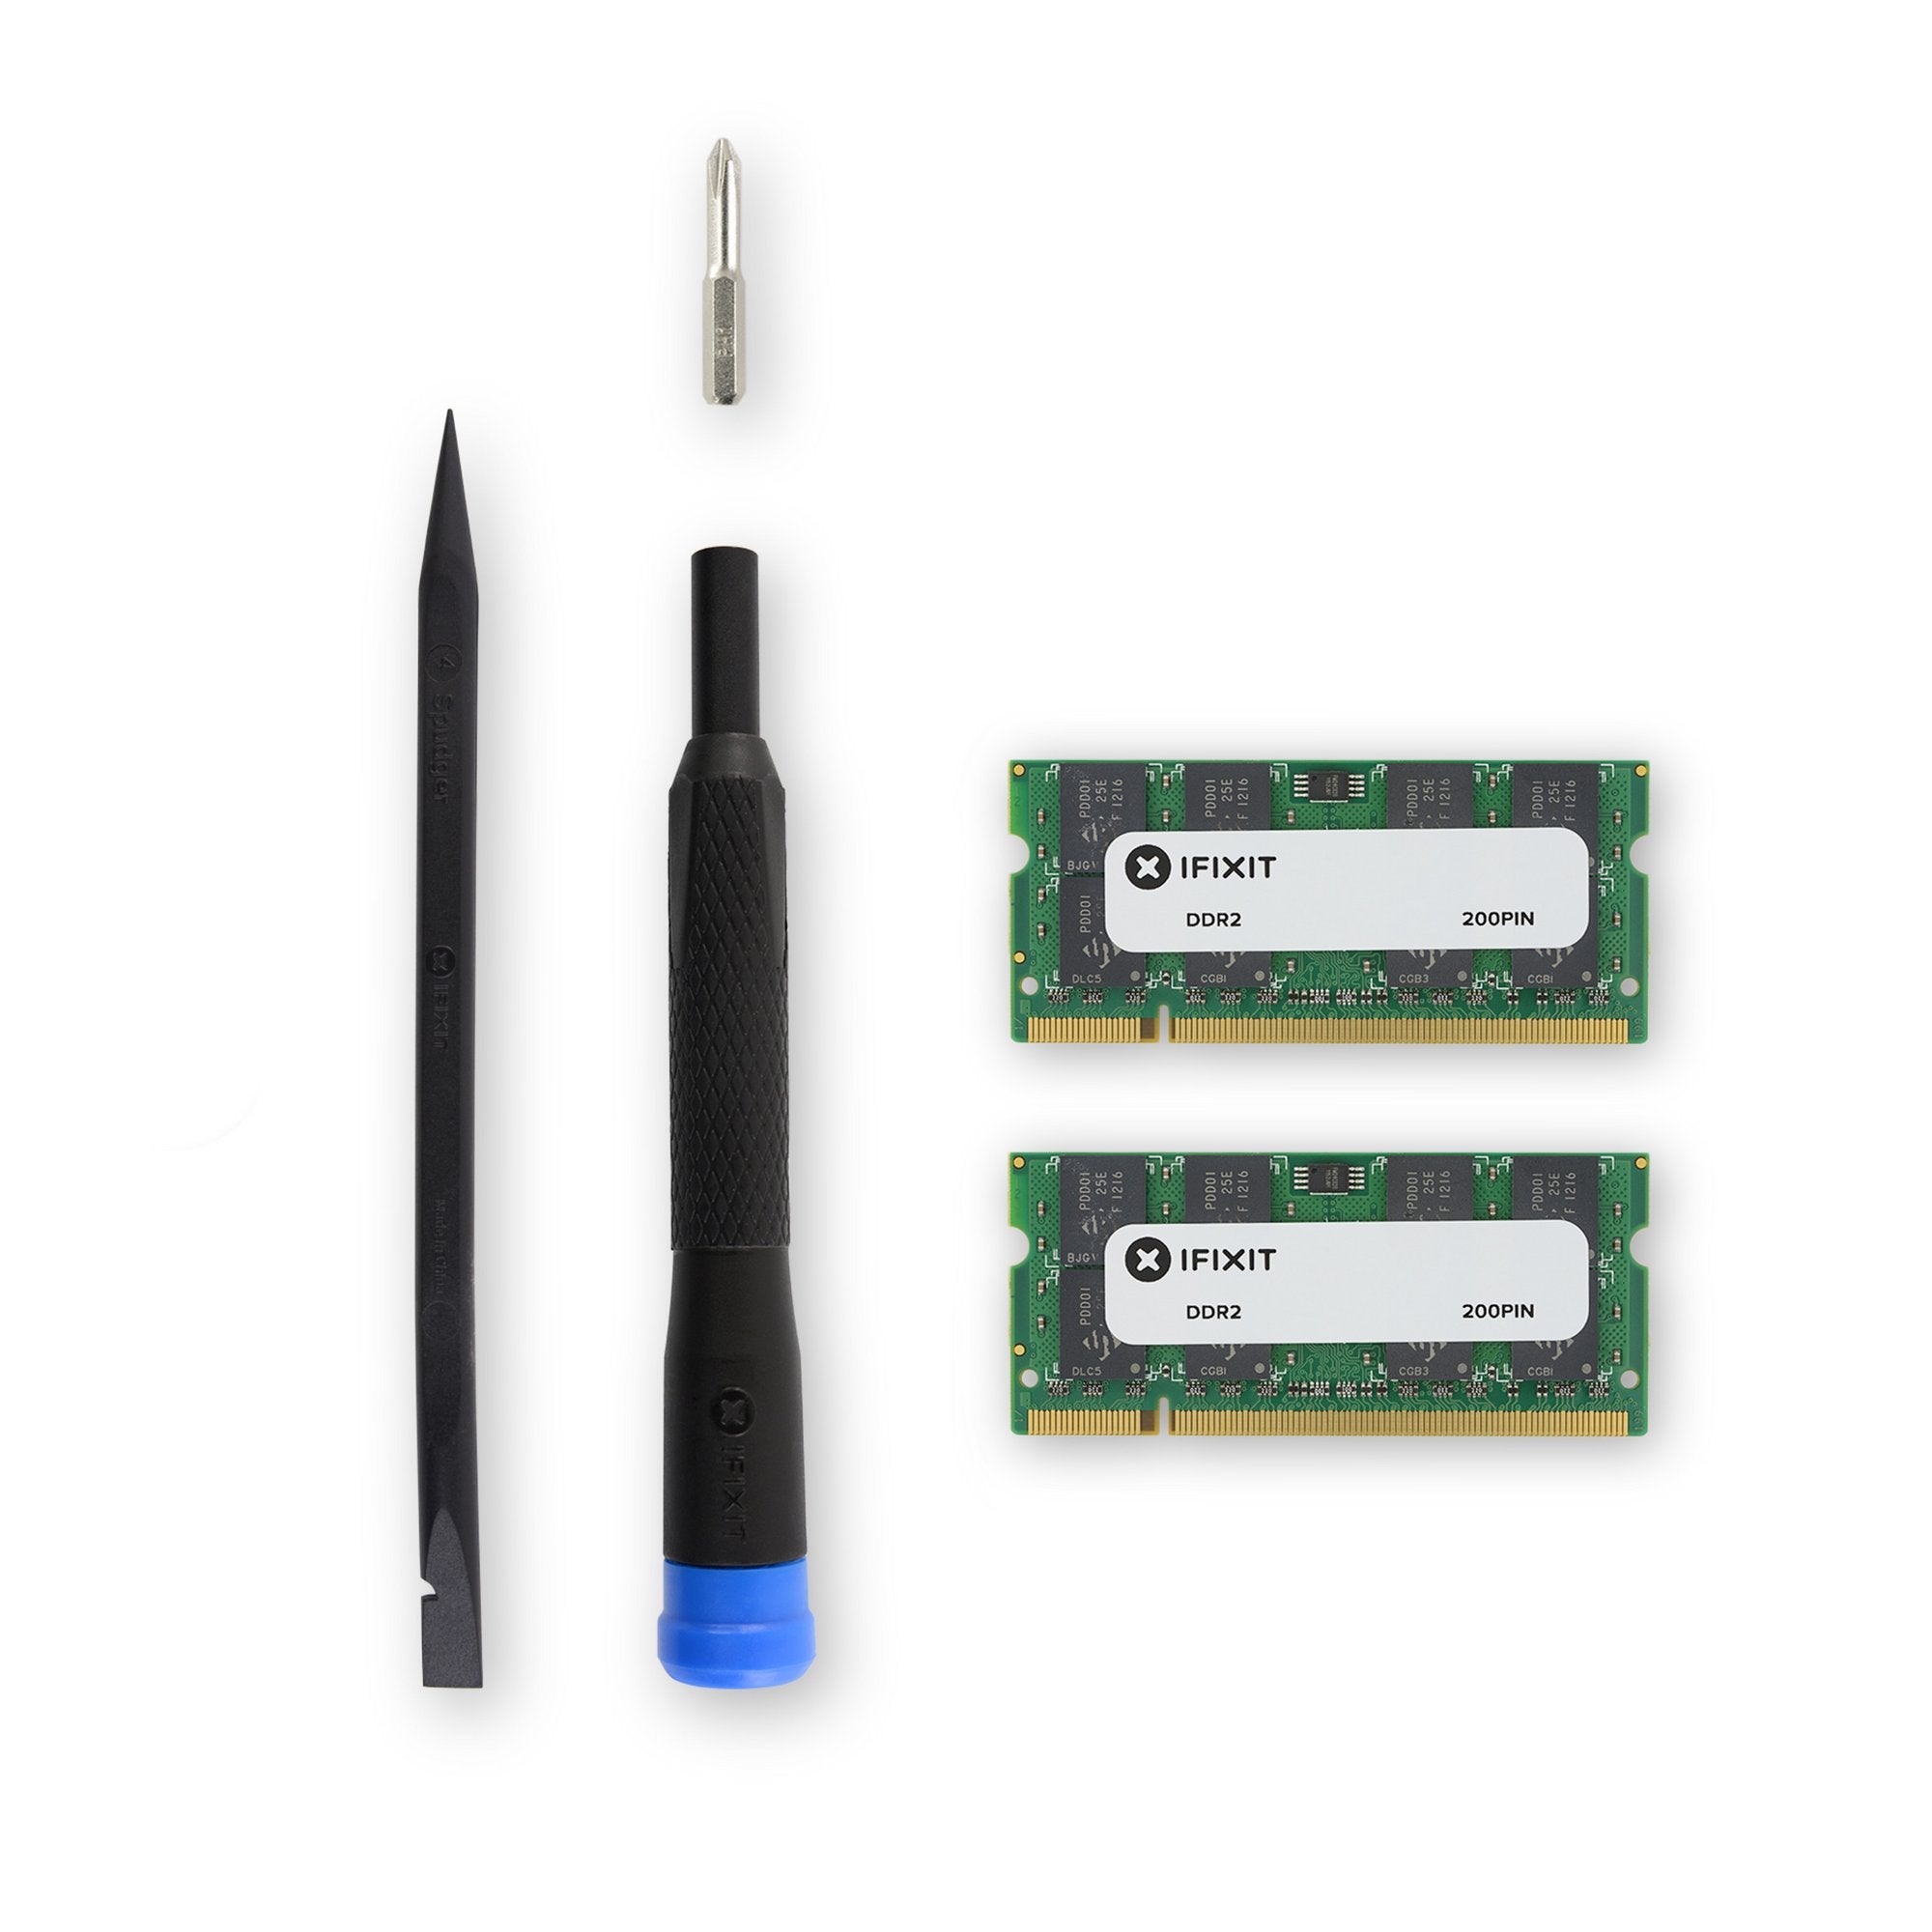 iMac Intel 20" EMC 2210 (Early 2008) Memory Maxxer RAM Upgrade Kit